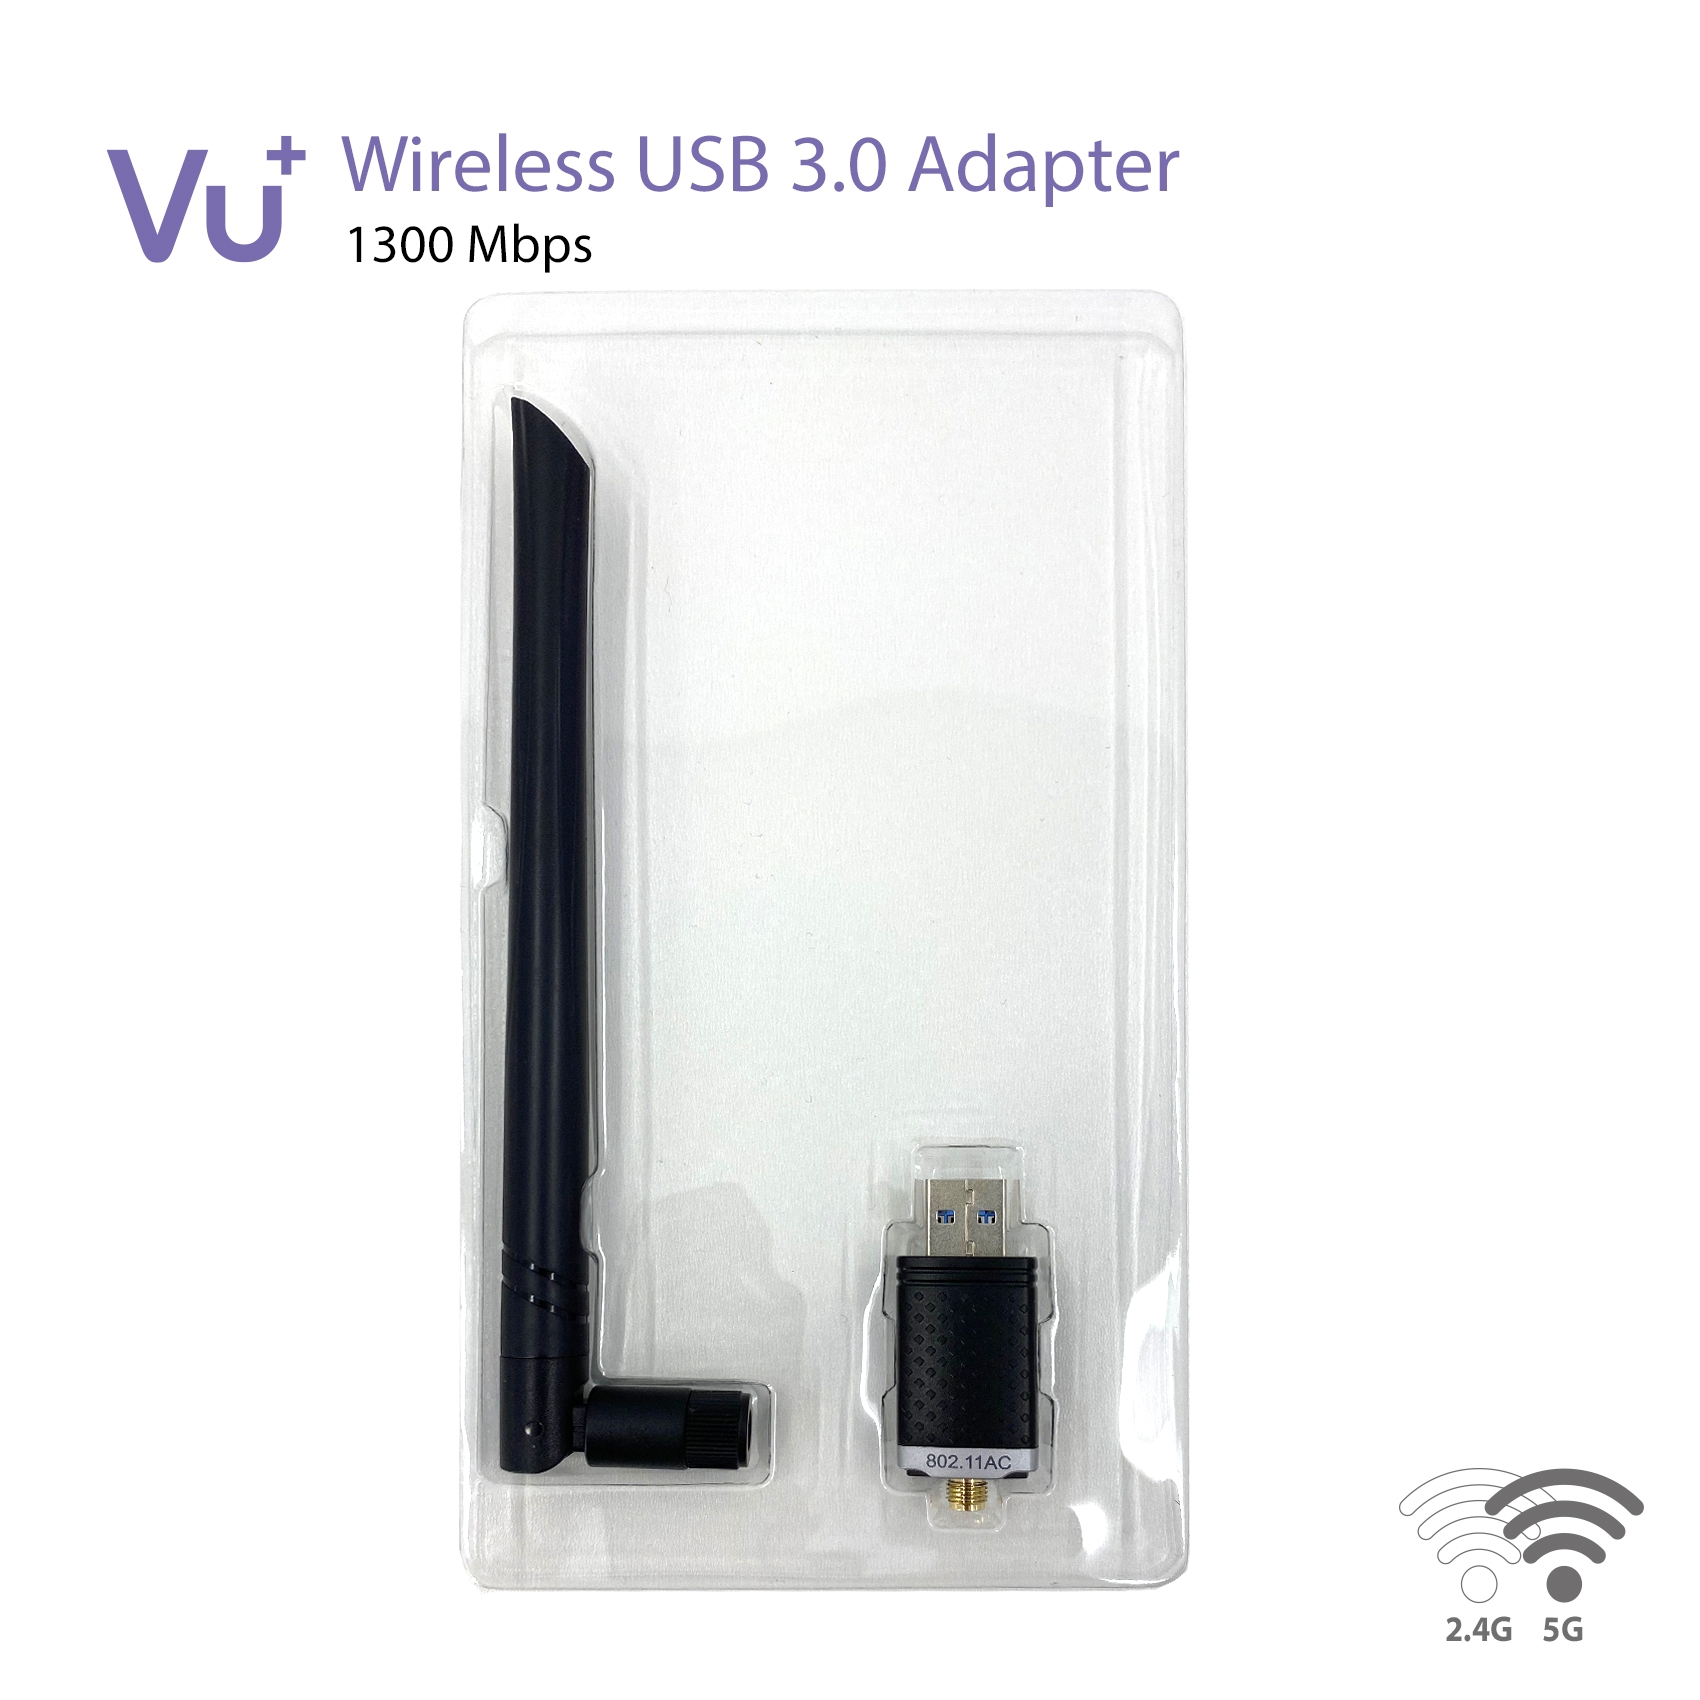 VU+ Dual Band Wireless USB 3.0 Adapter 1300 Mbps inkl. 6 dBi Antenne